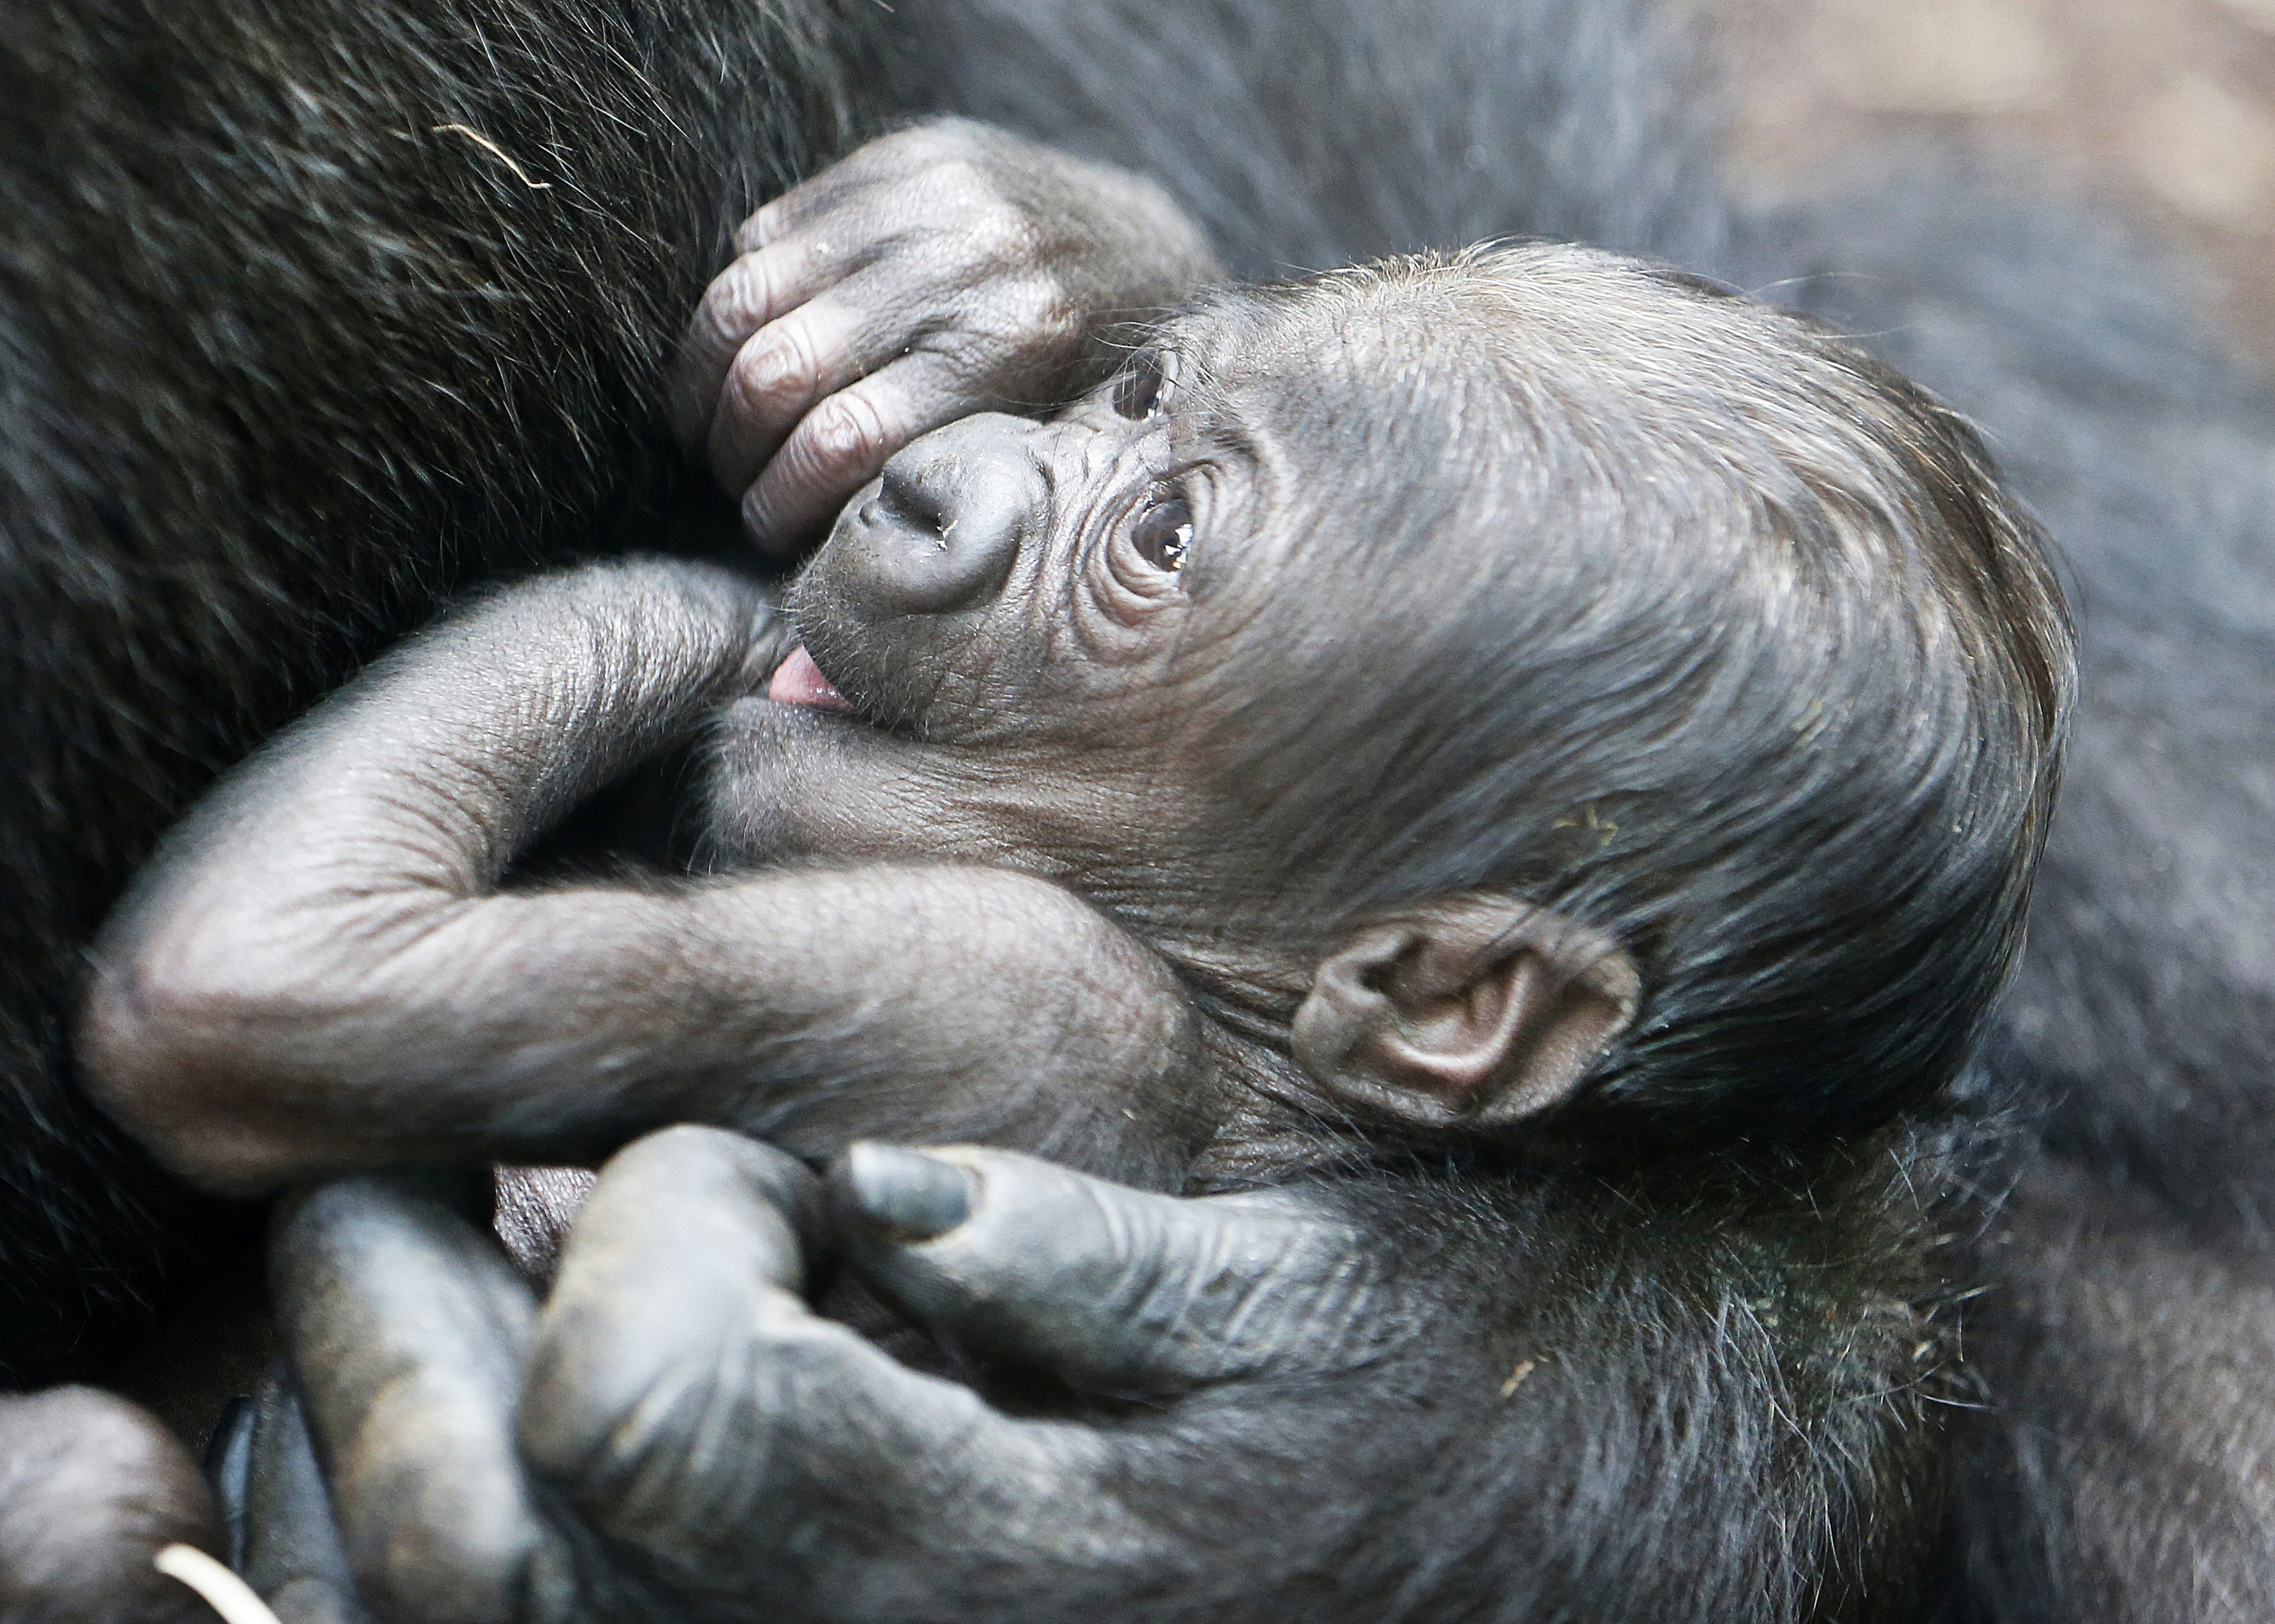 The gorilla baby (AP Photo/Michael Probst)